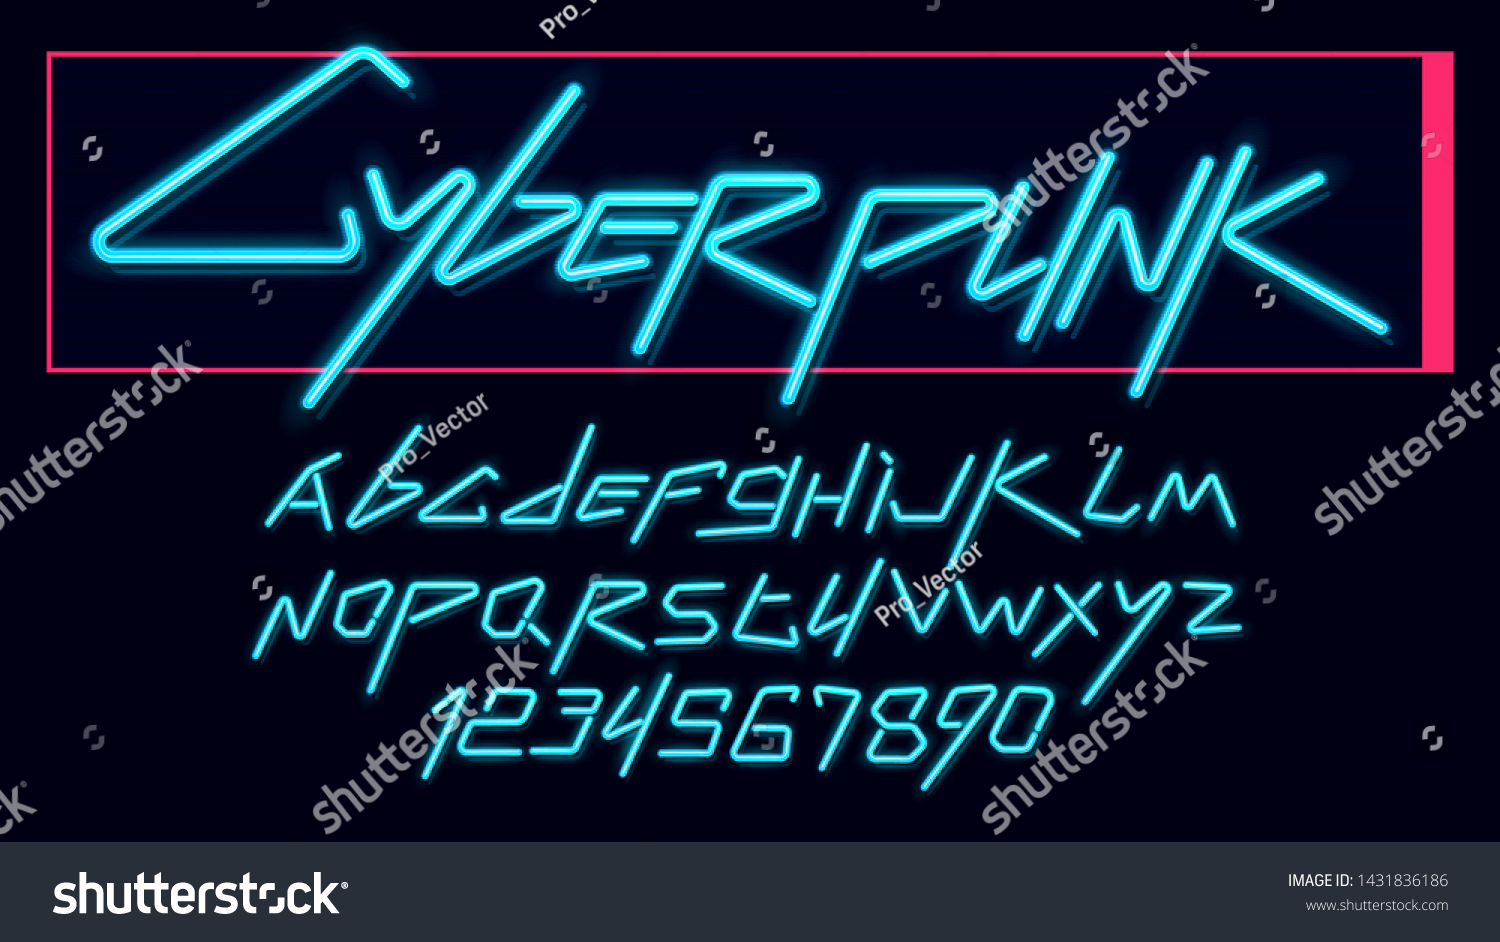 cyberpunk 2077 1.5 patch notes pc